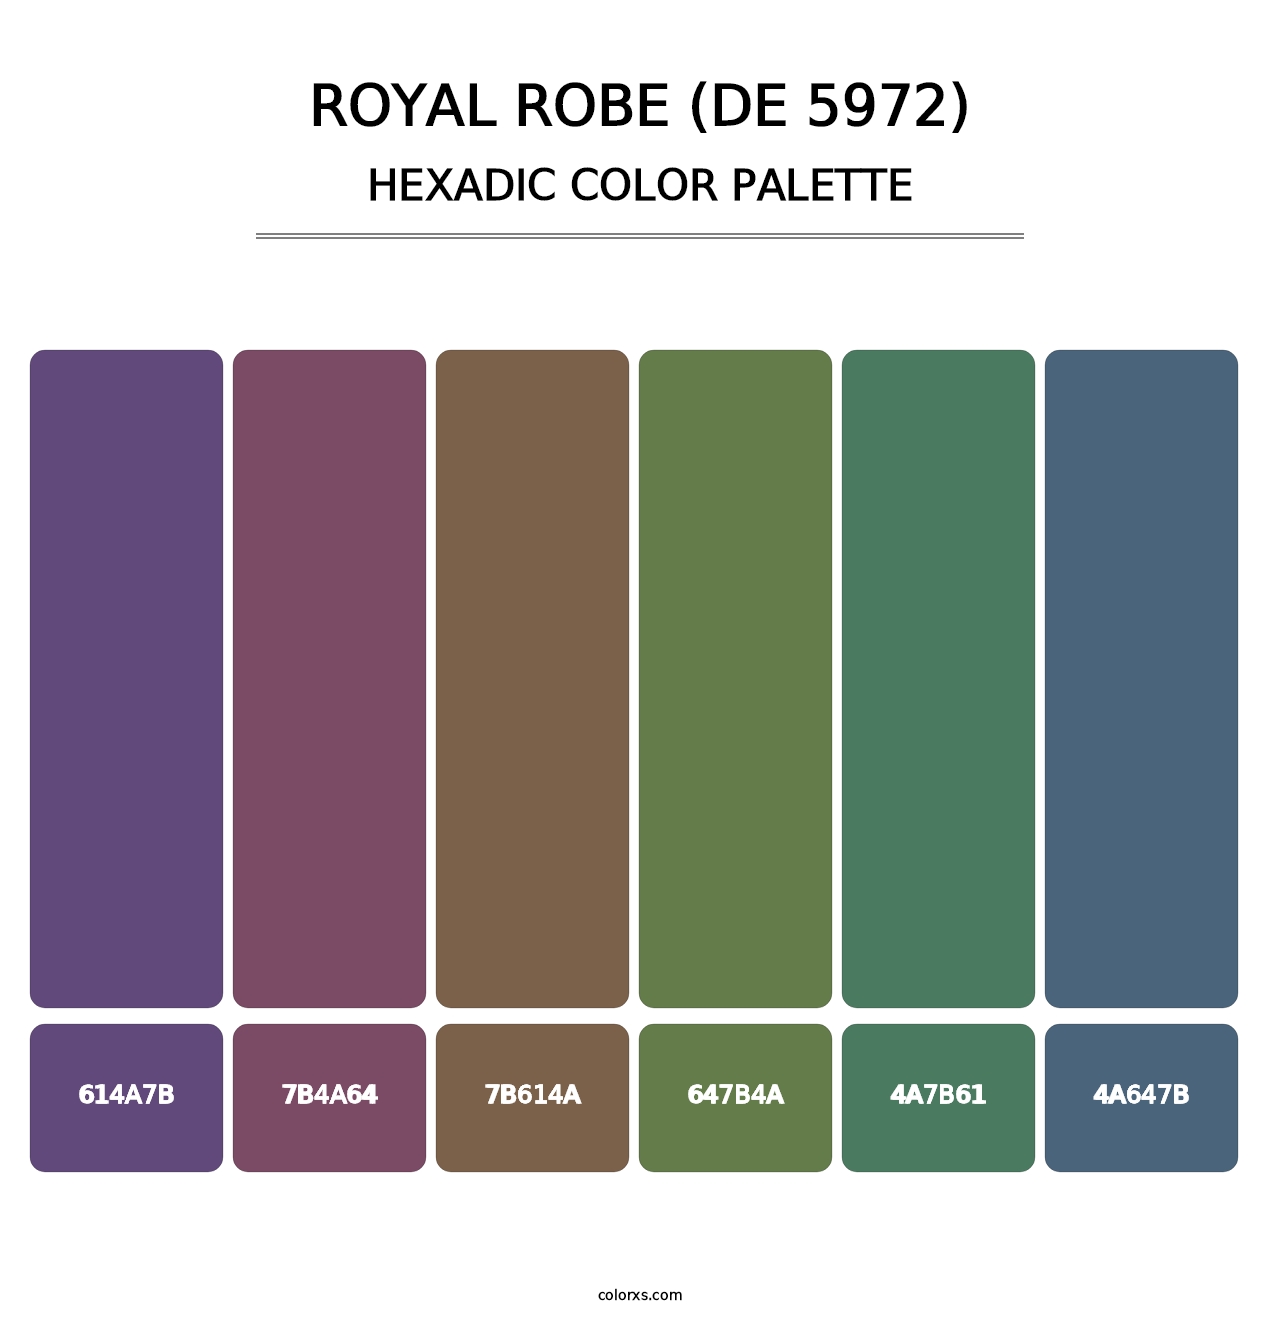 Royal Robe (DE 5972) - Hexadic Color Palette